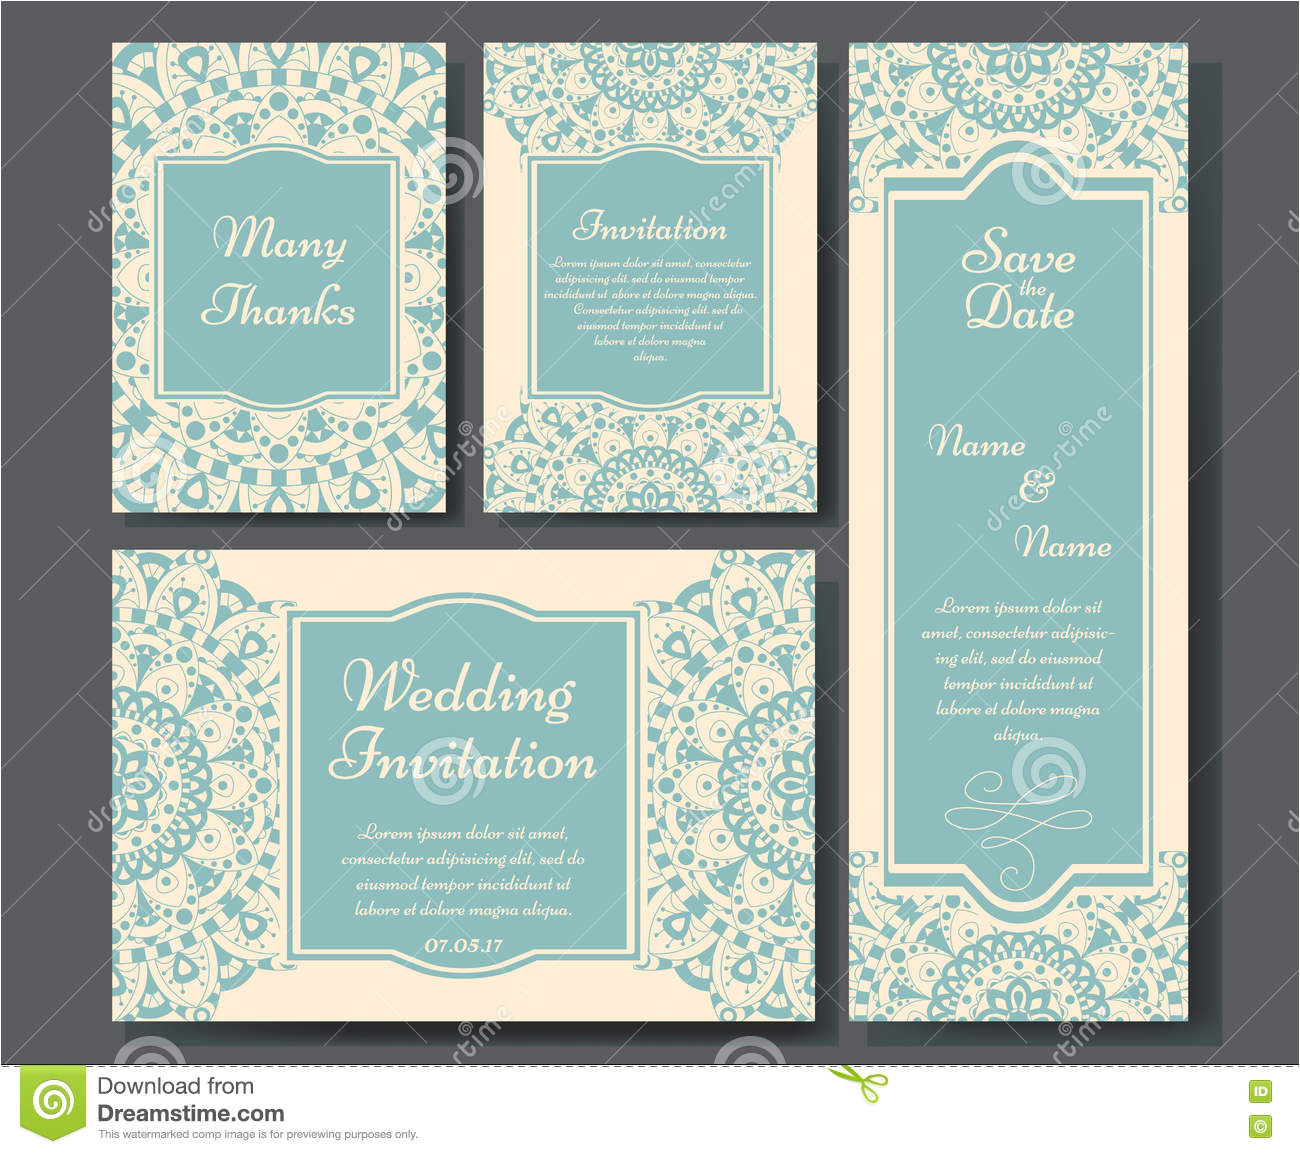 stock illustration wedding card collection mandala template invitation card decorative greeting invitaion design vintage islam arabic image81958742